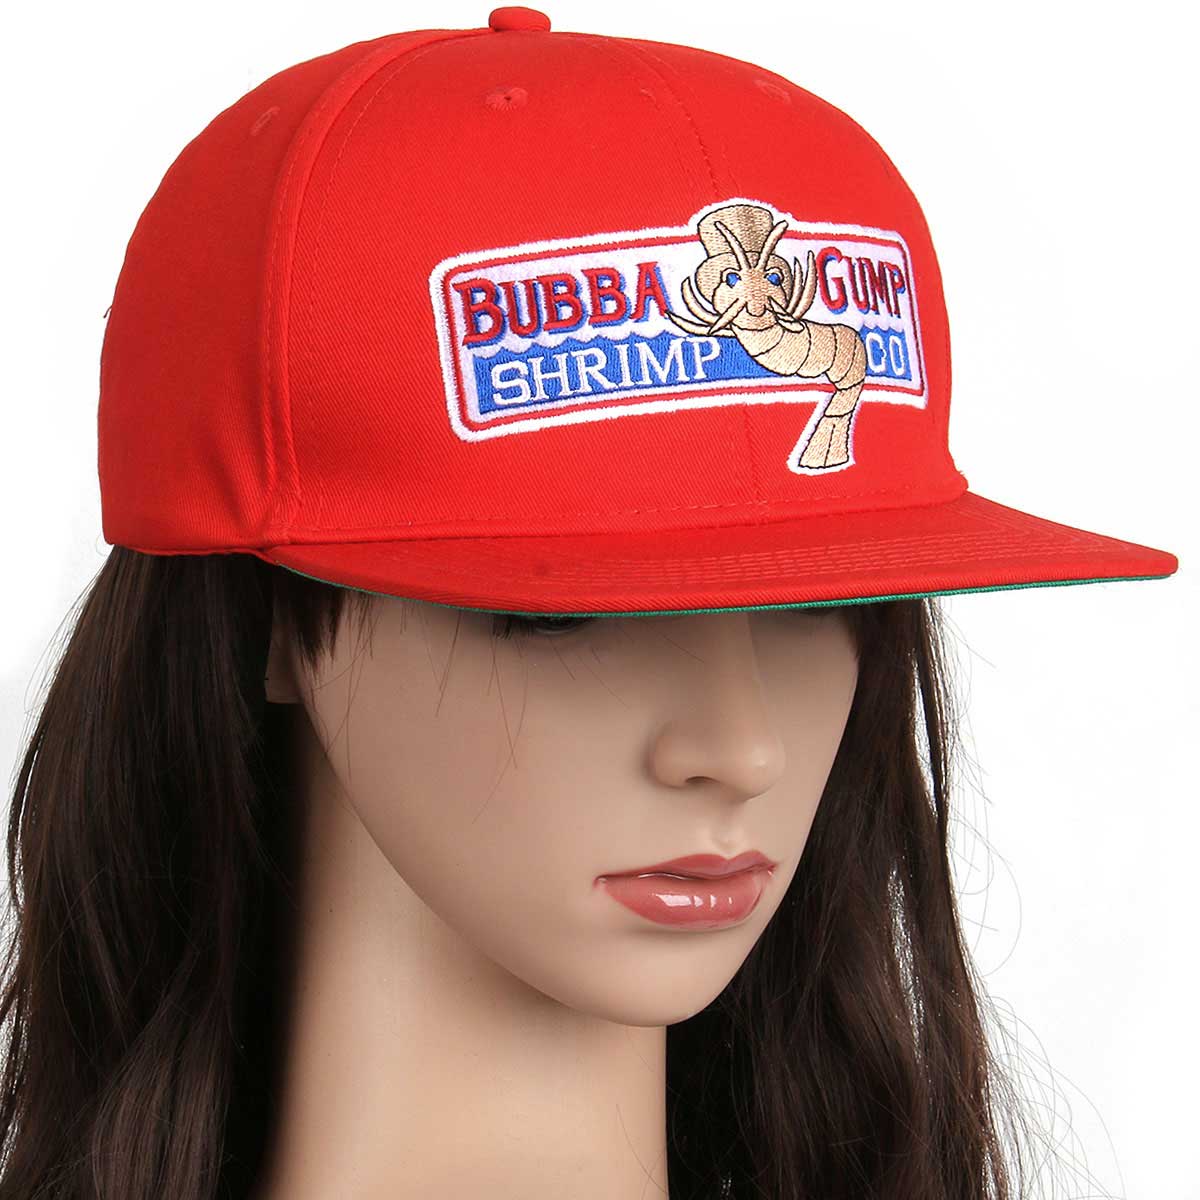 1994 bubba gump shrimp co . Sombrero de béisbol Forrest Gump Disfraz Cosplay Bordado Snapback Cap Men & Women Gorra de verano